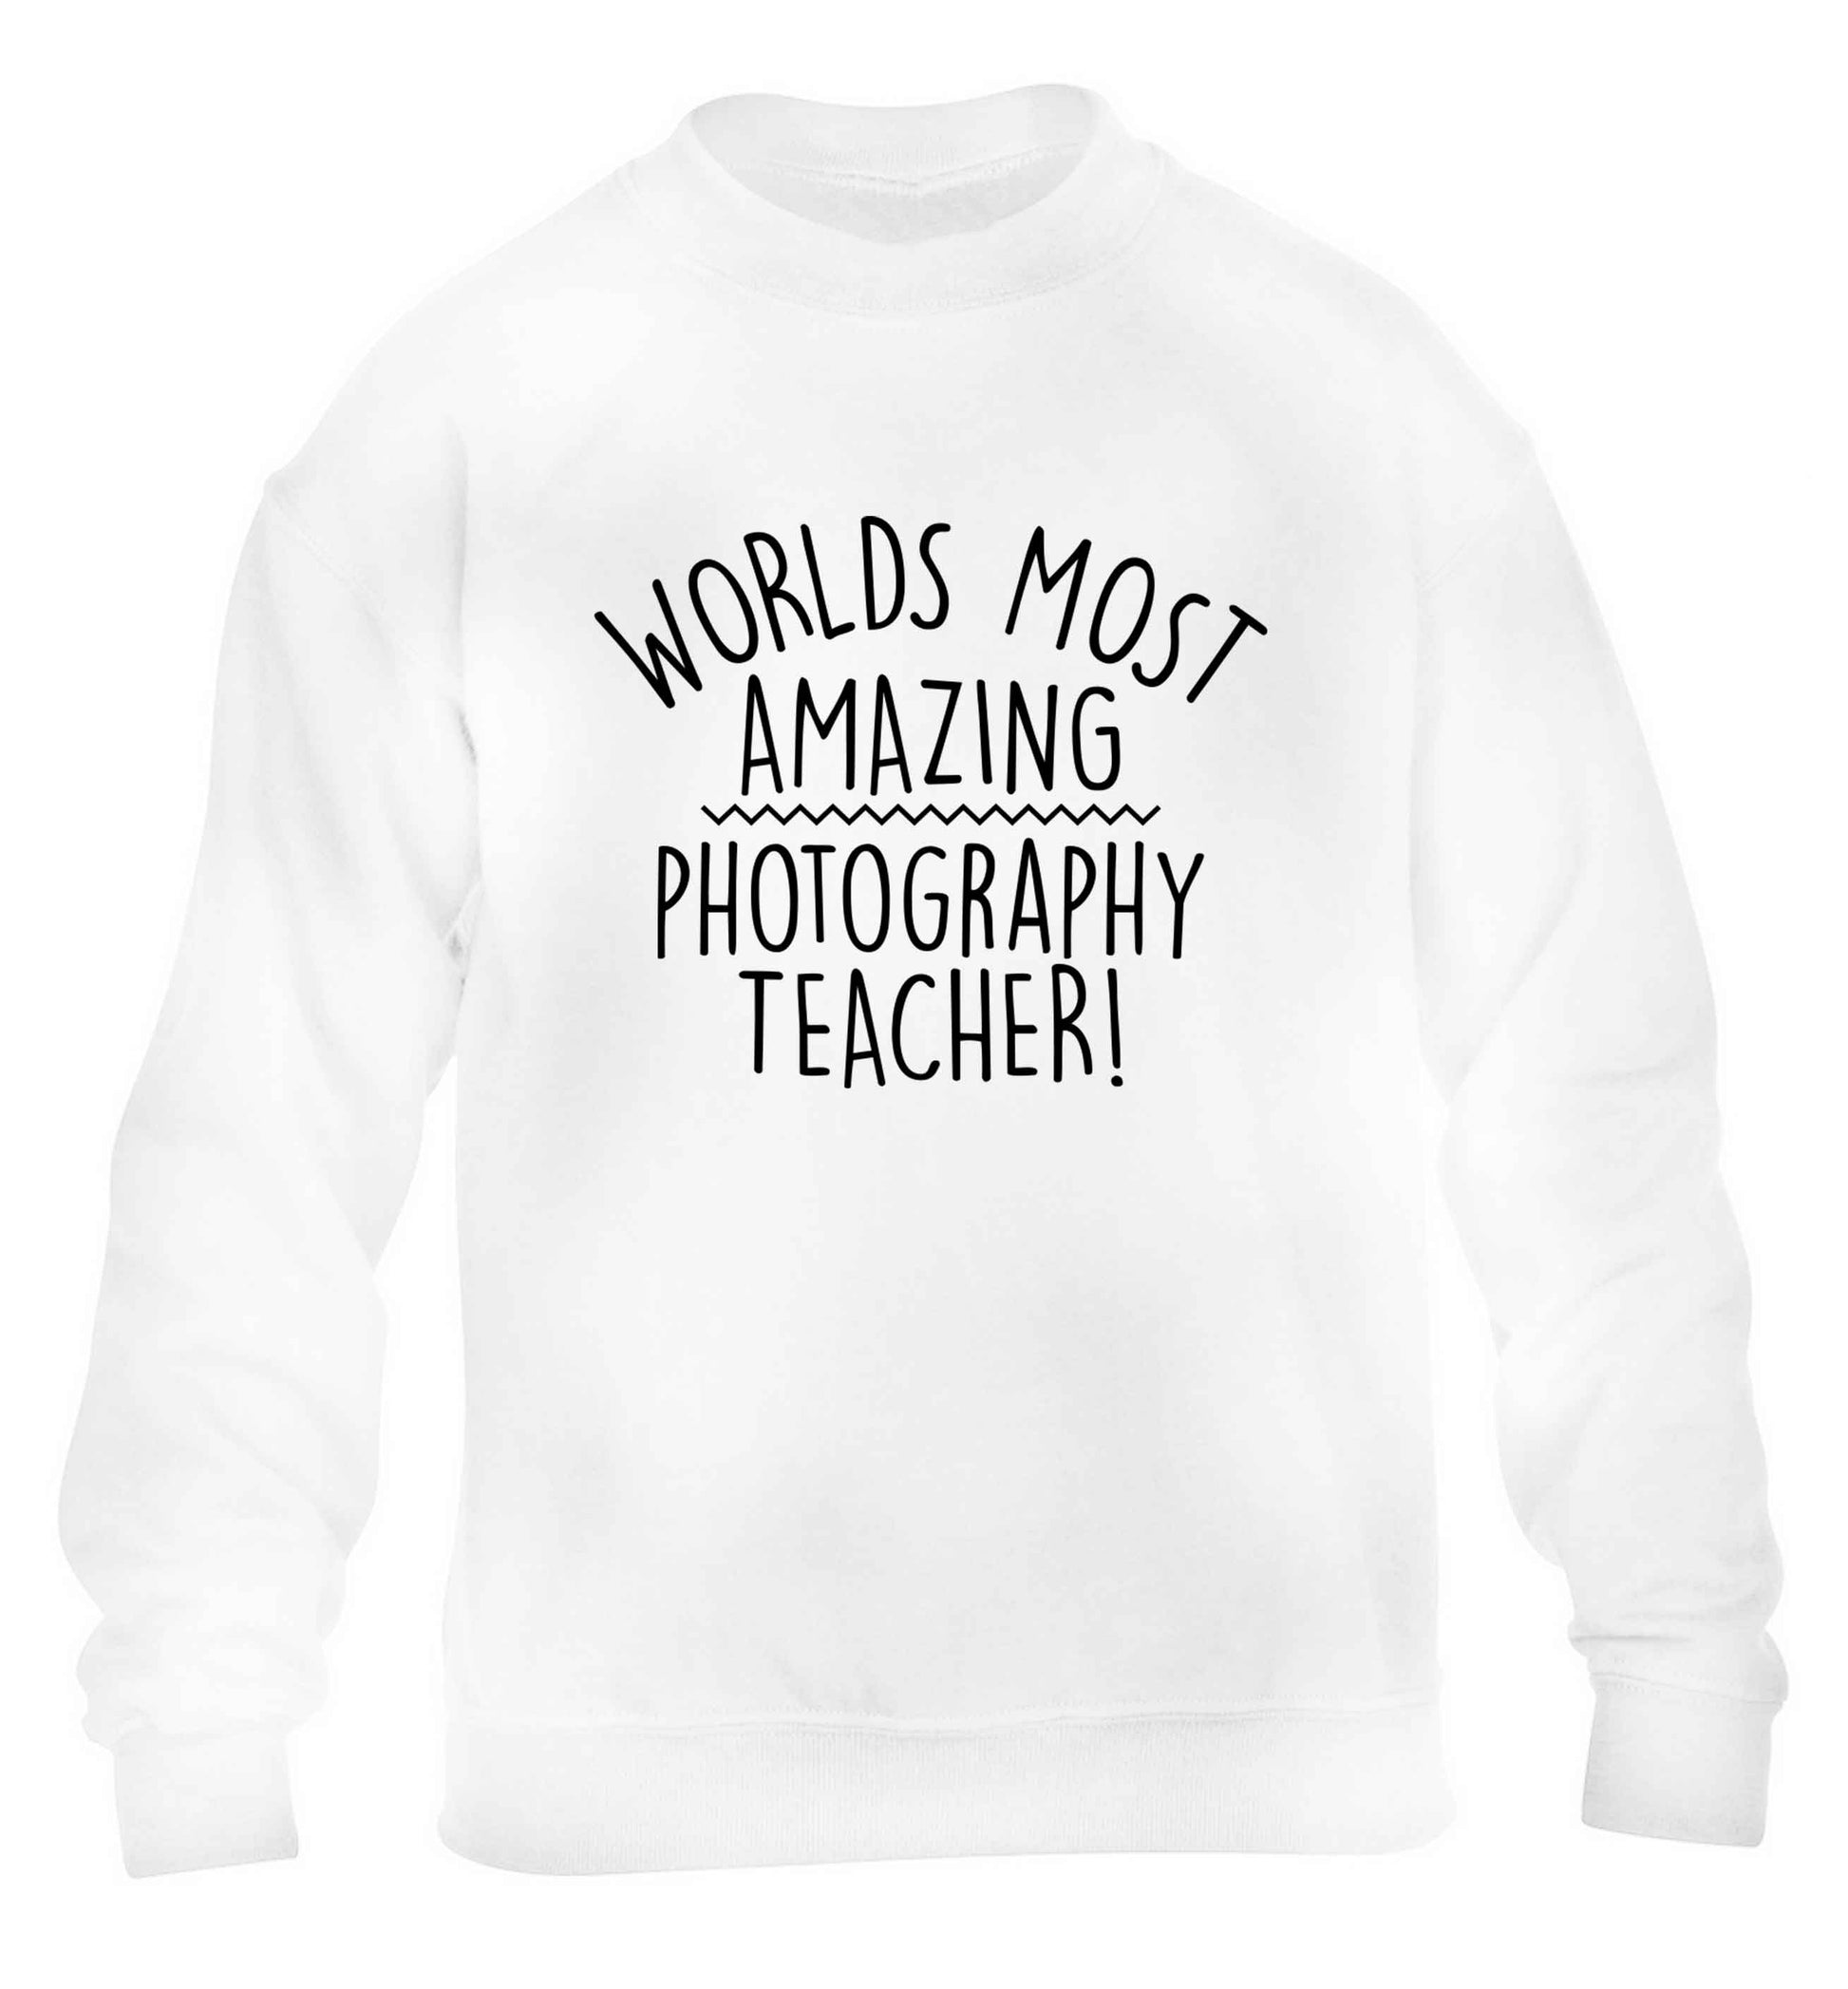 Worlds most amazing photography teacher children's white sweater 12-13 Years